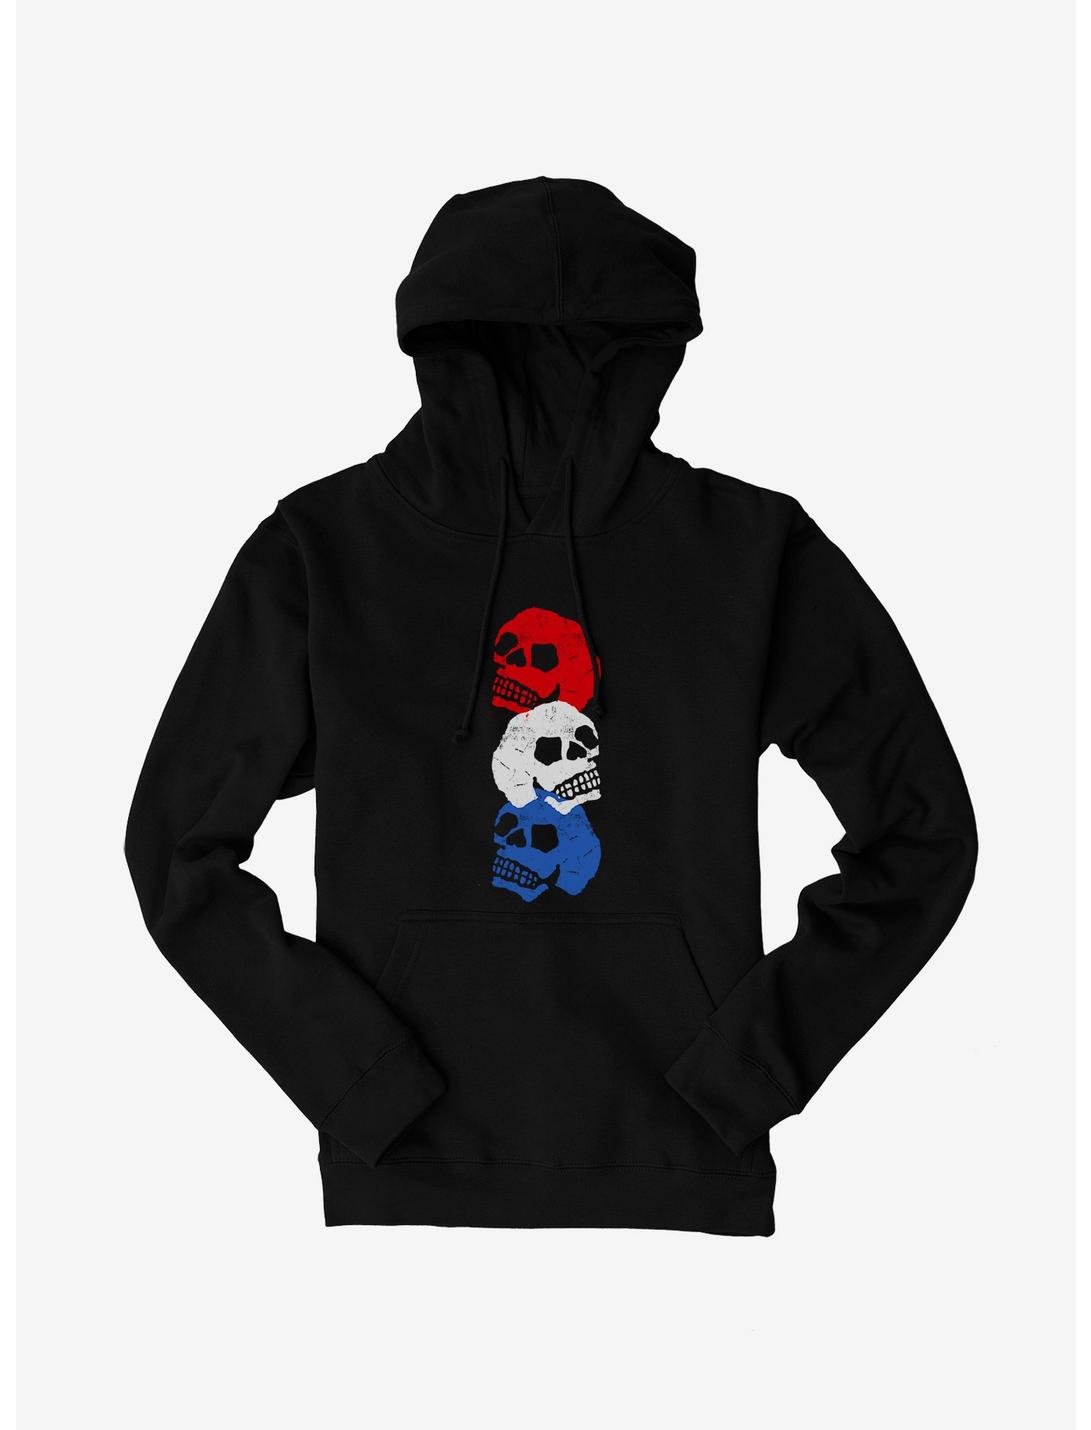 iCreate Americana Red, White, And Blue Skulls Hoodie, , hi-res